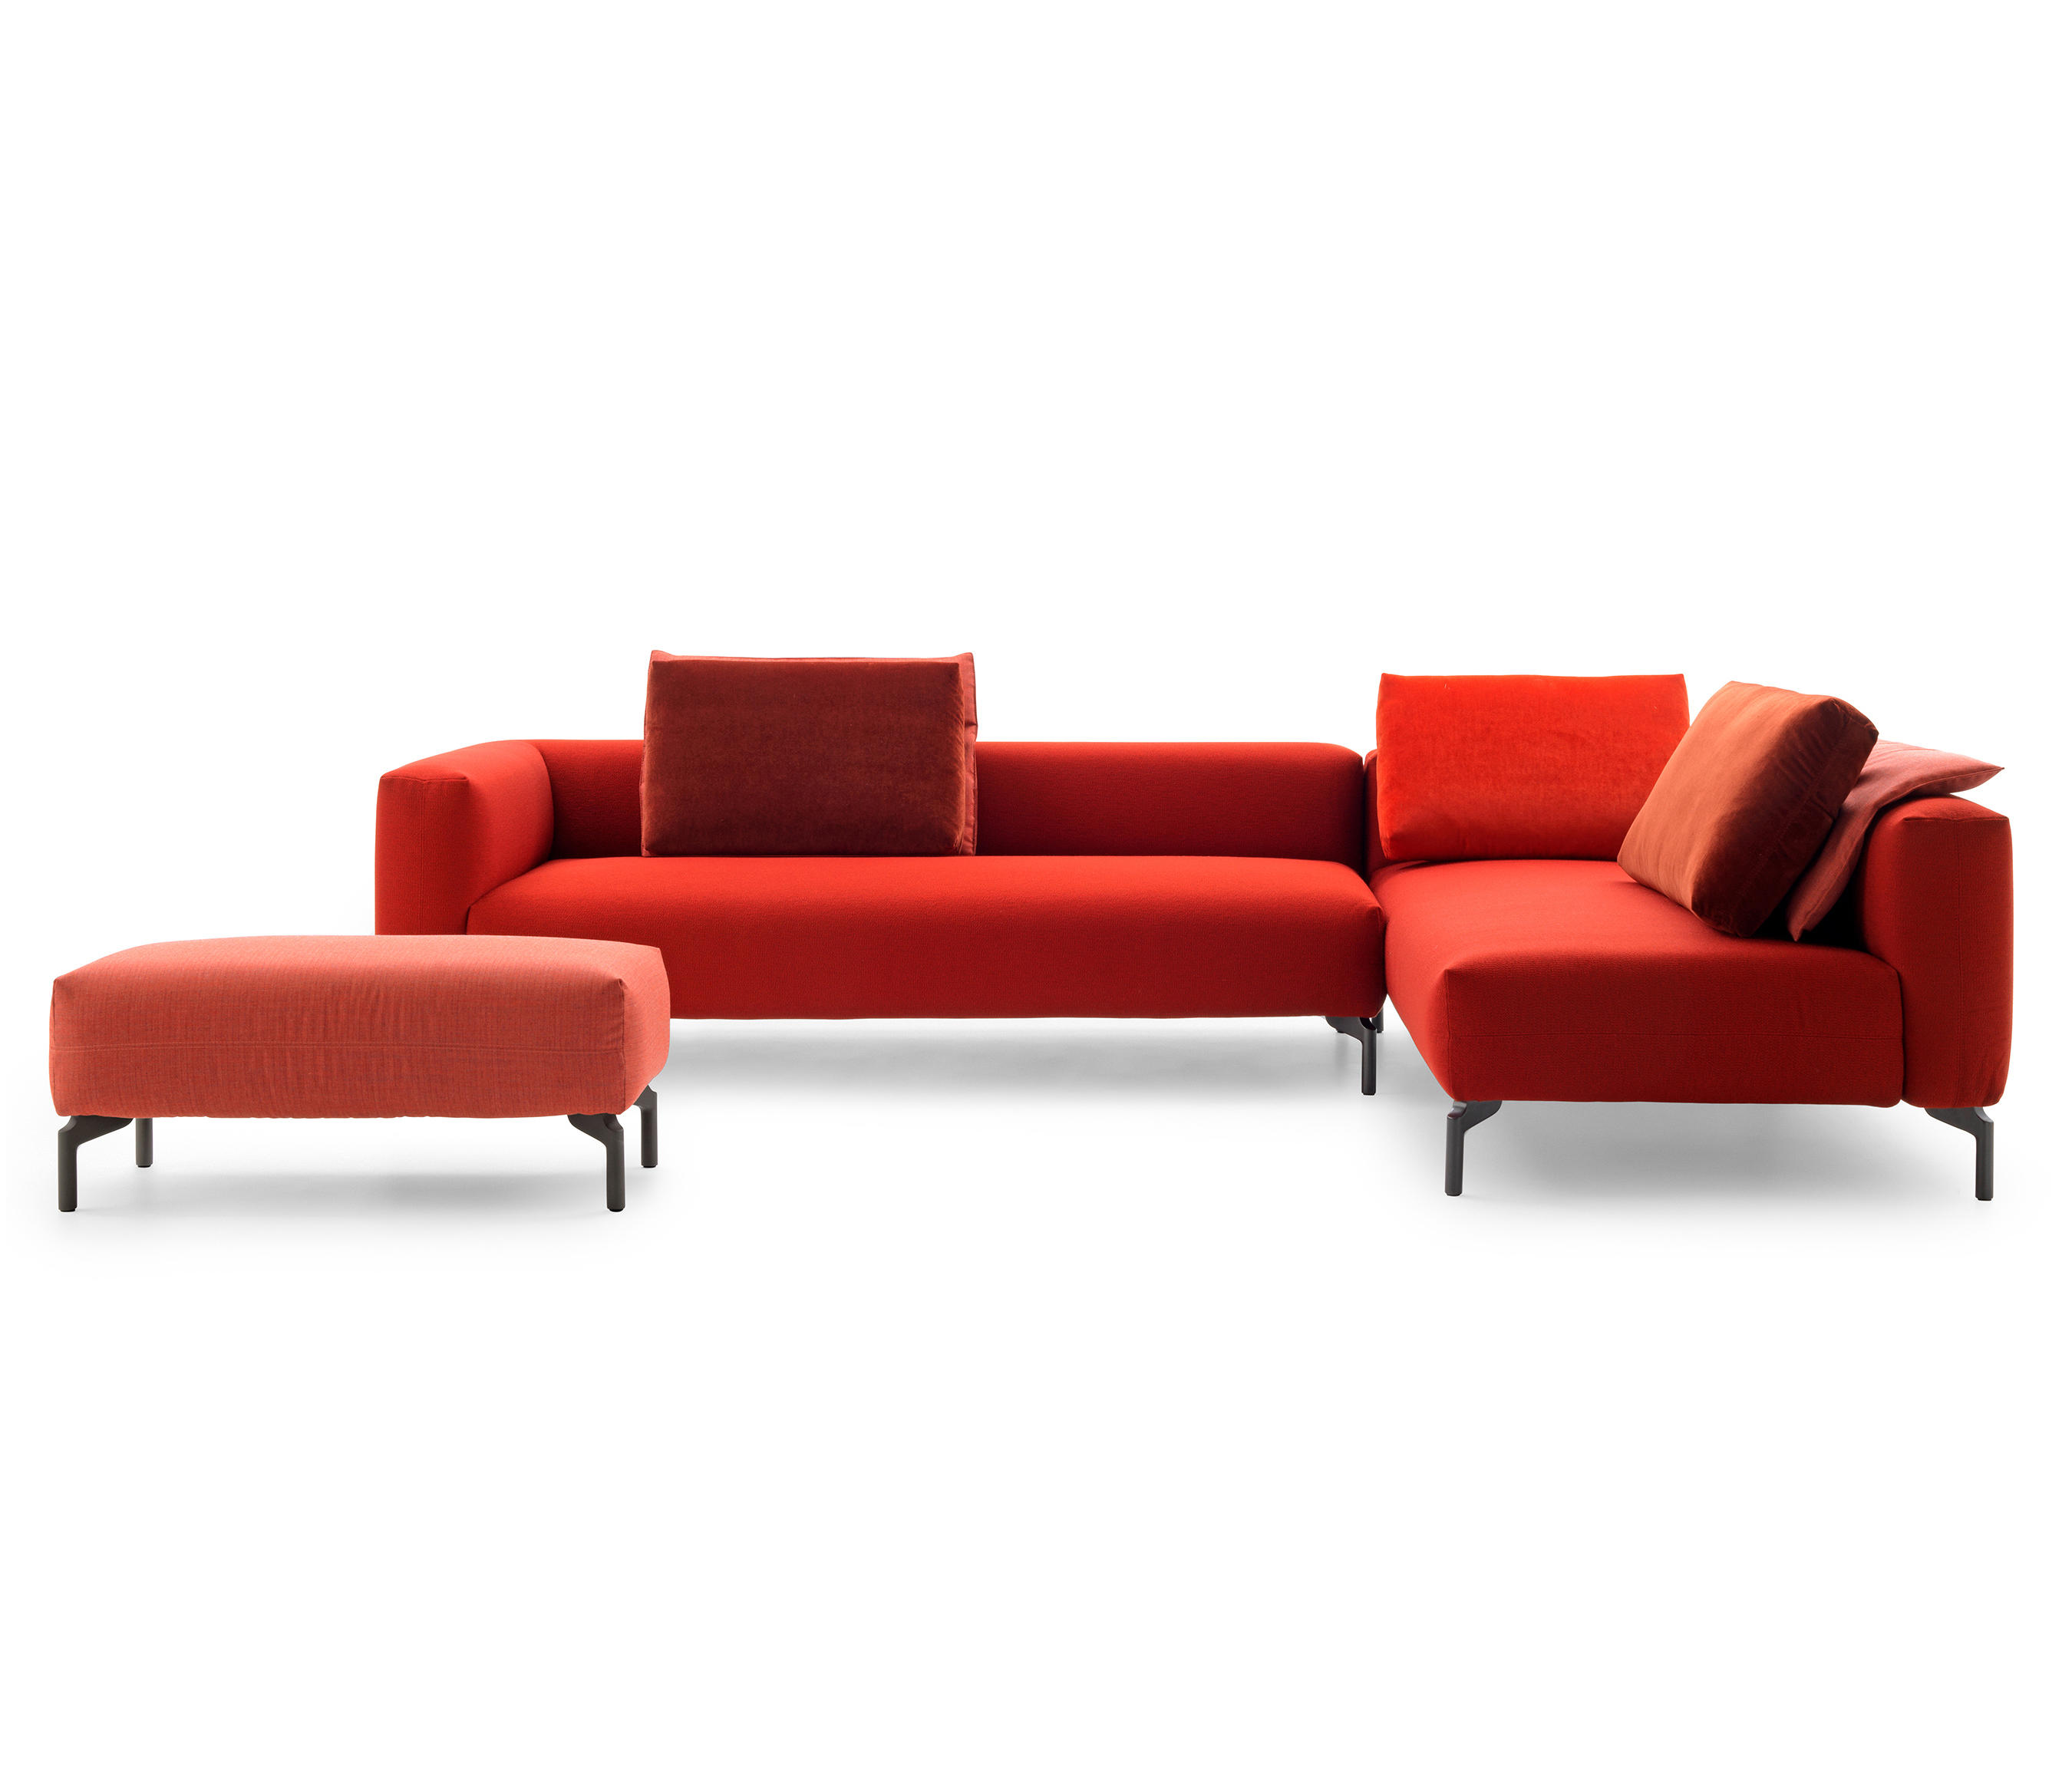 LX698 Modular Sofa by Pascal Bosetti for Leolux LX